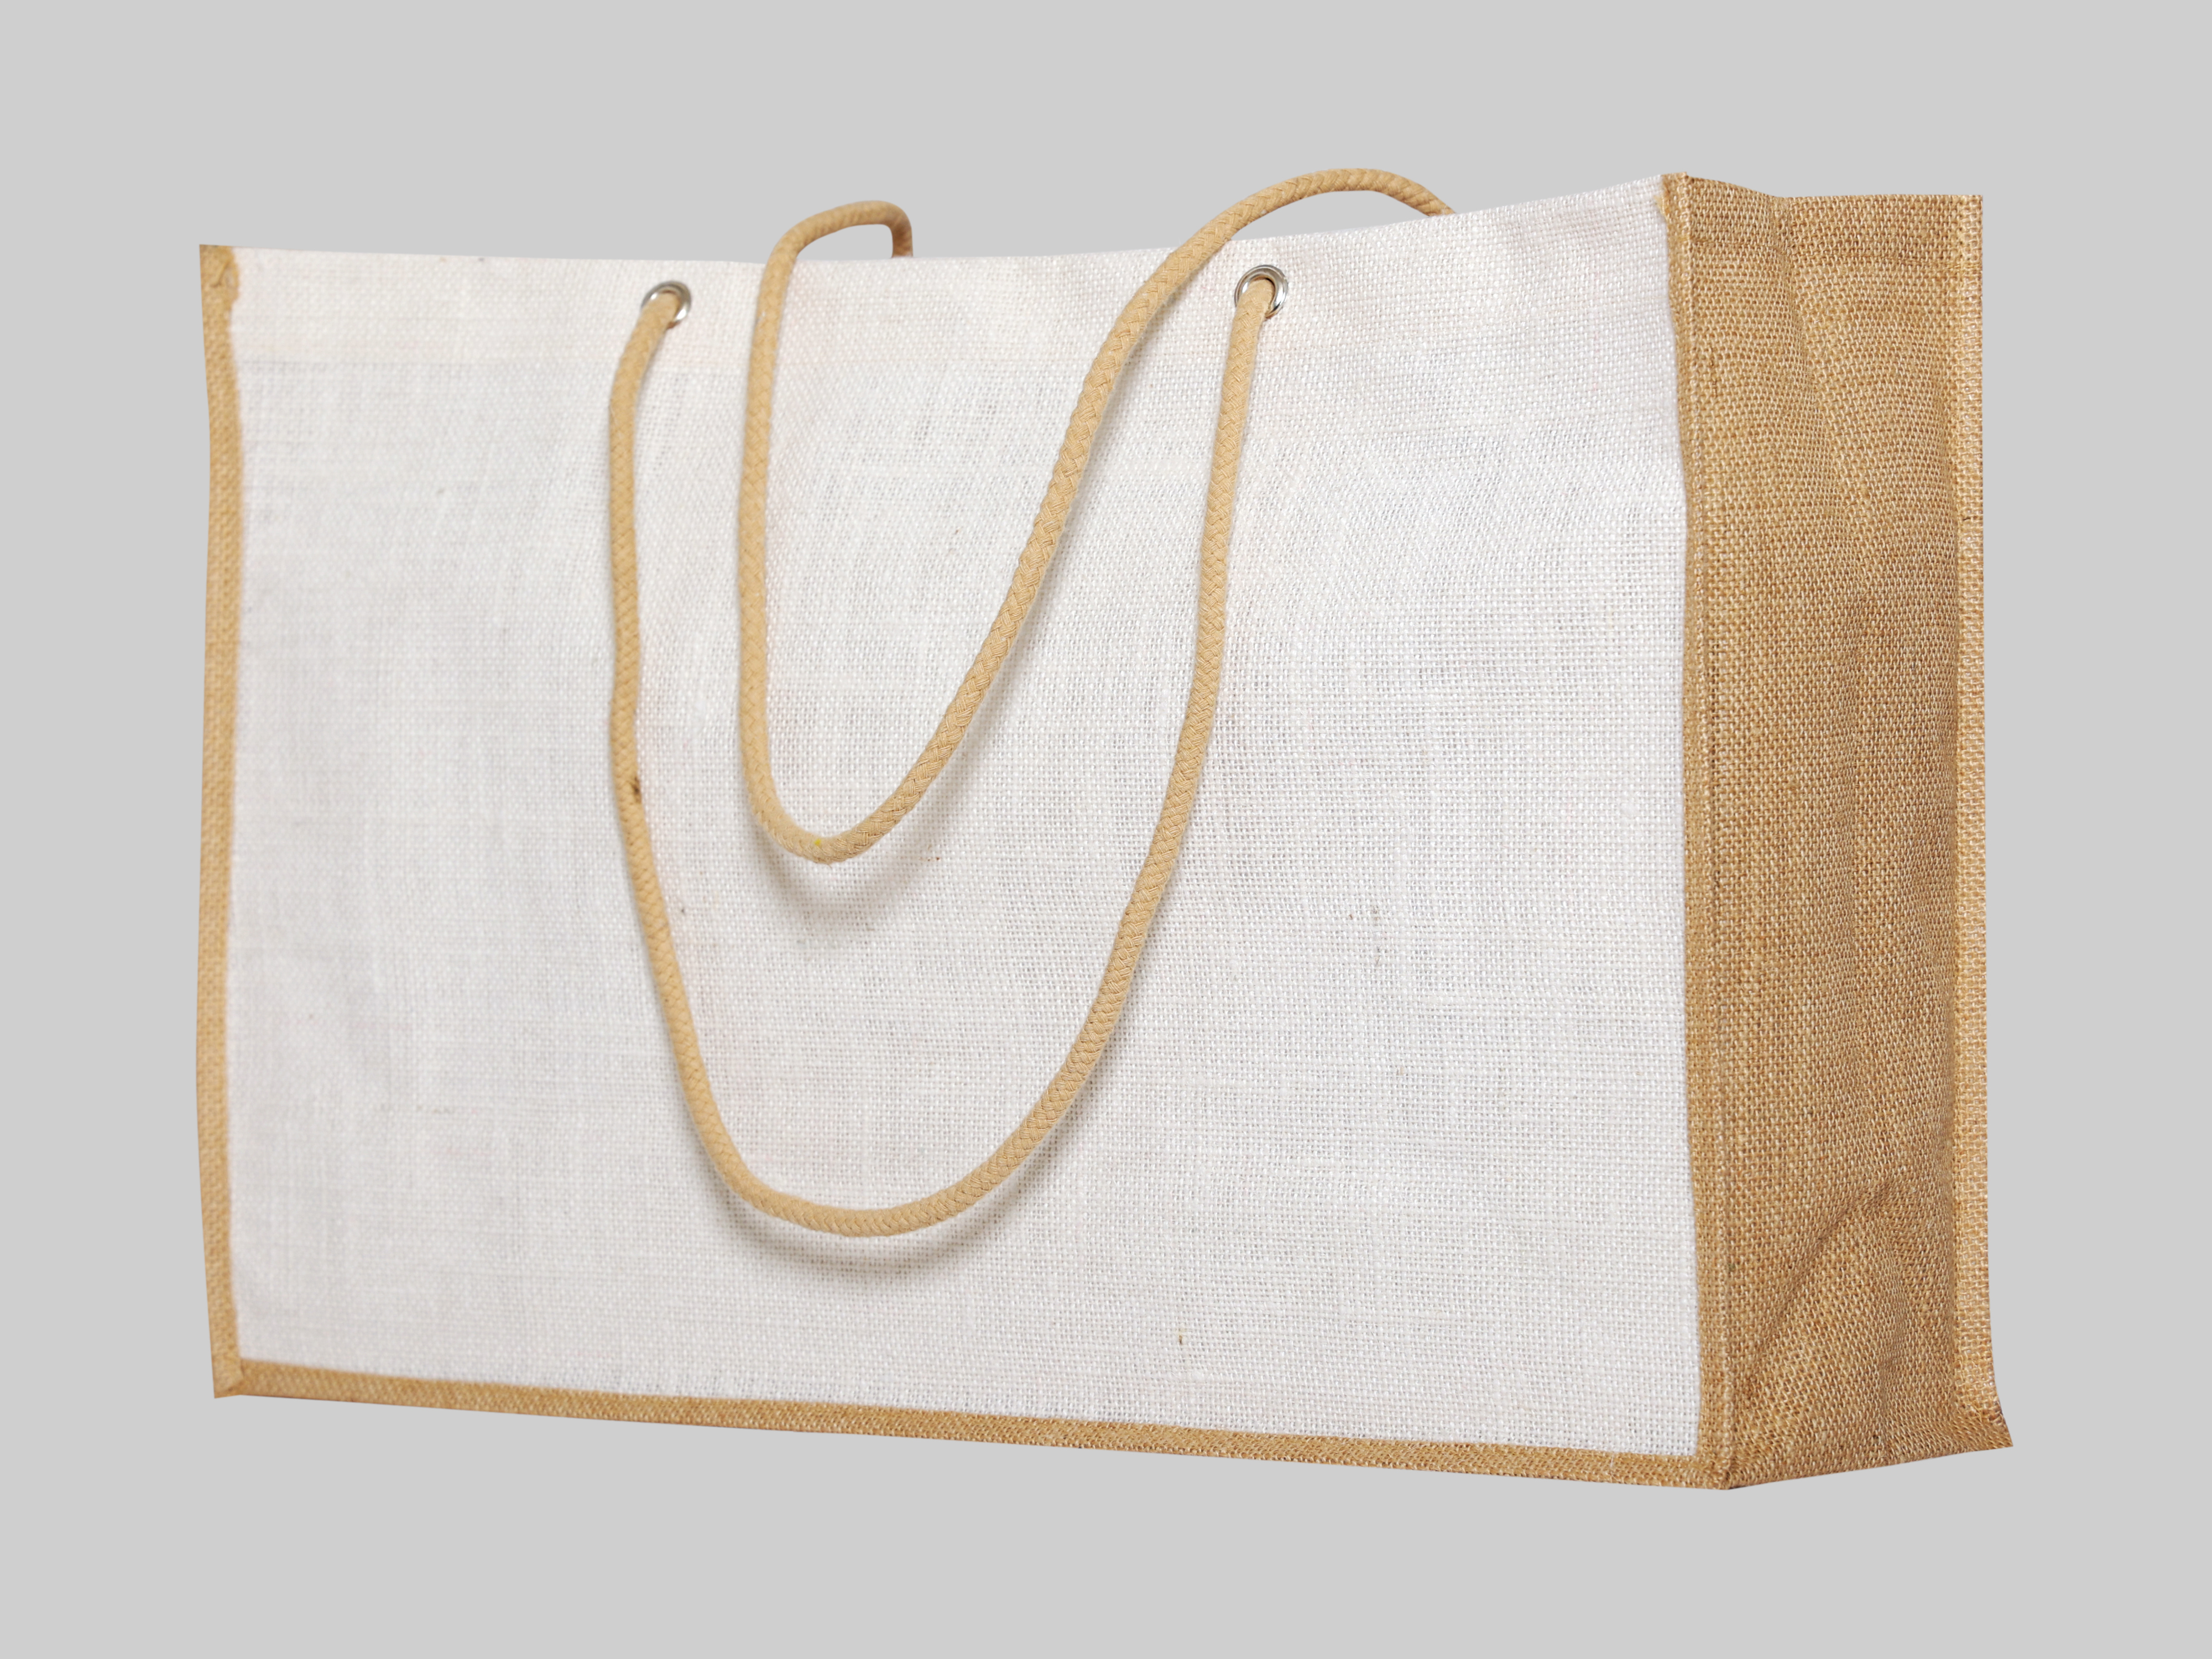 Jute bag, color: white/natural -  55x36+17cm.